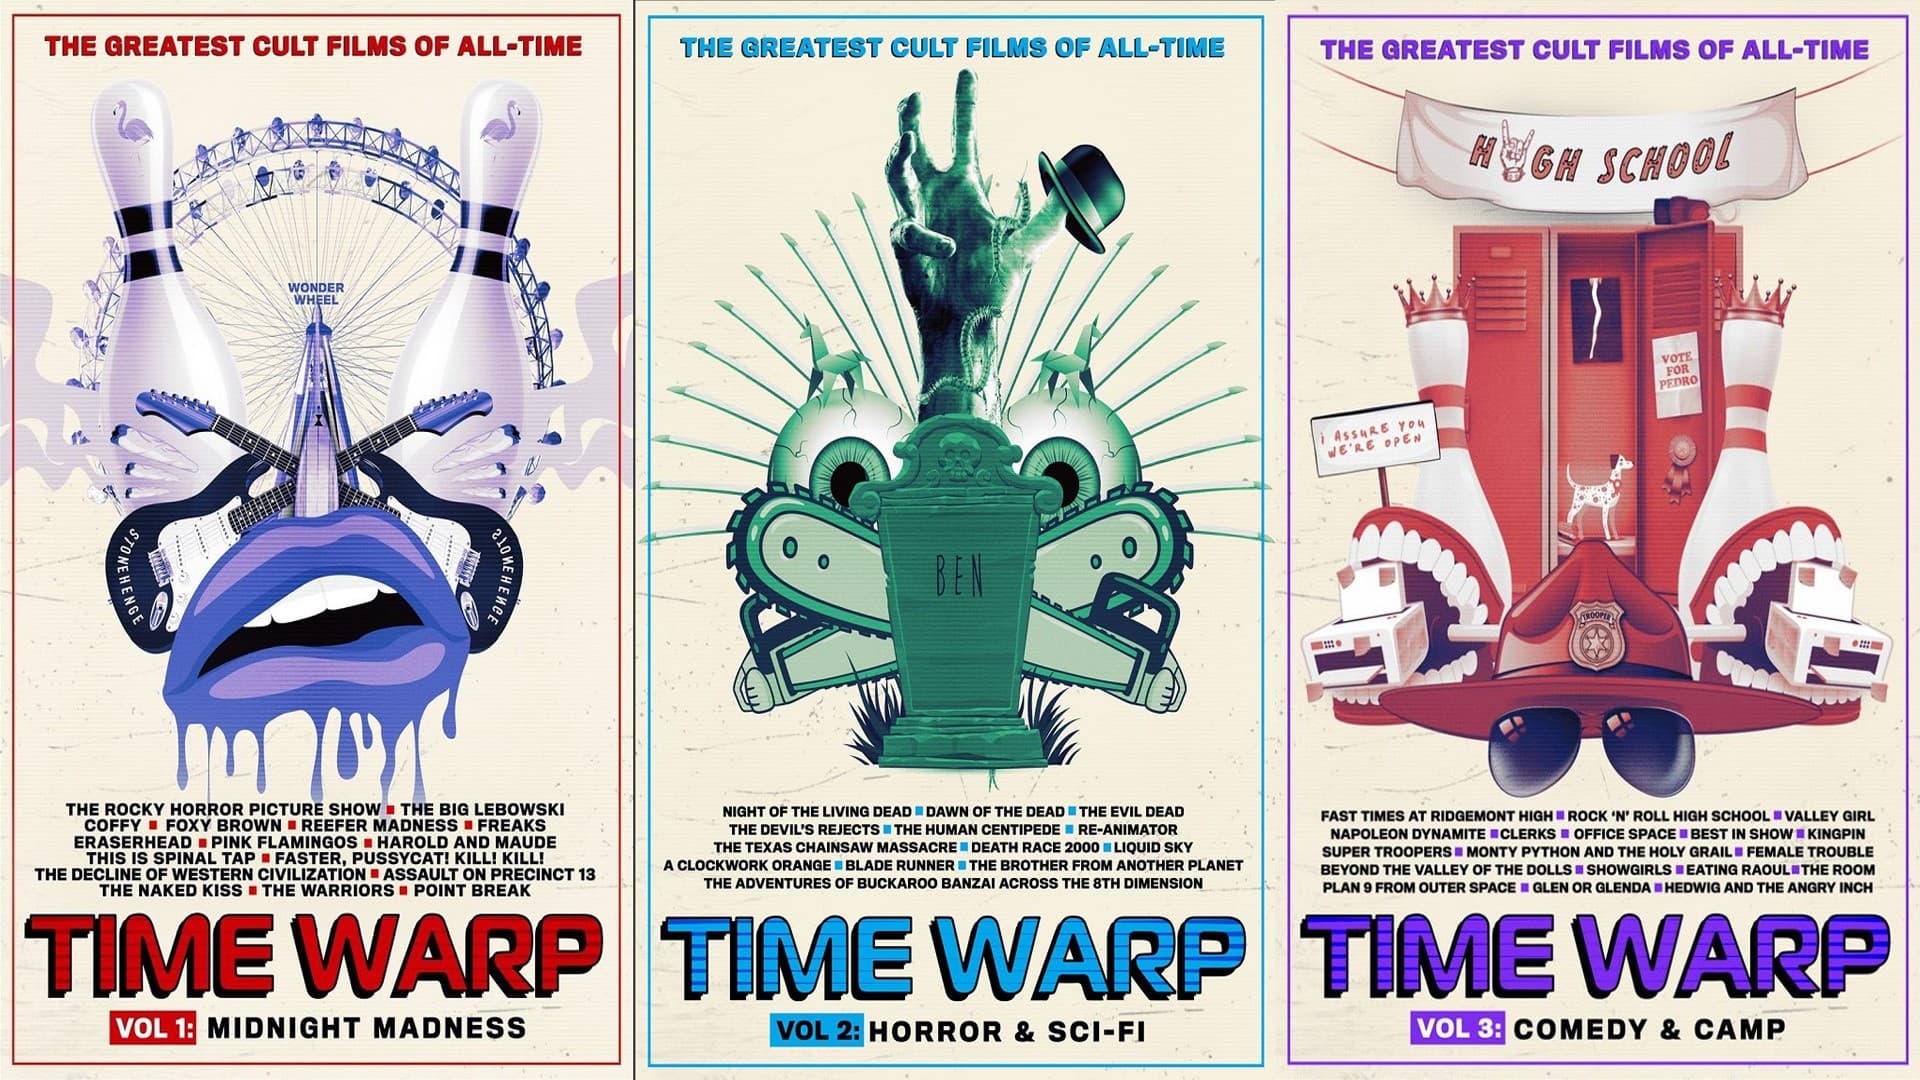 Time Warp Vol. 2: Horror and Sci-Fi (2020)